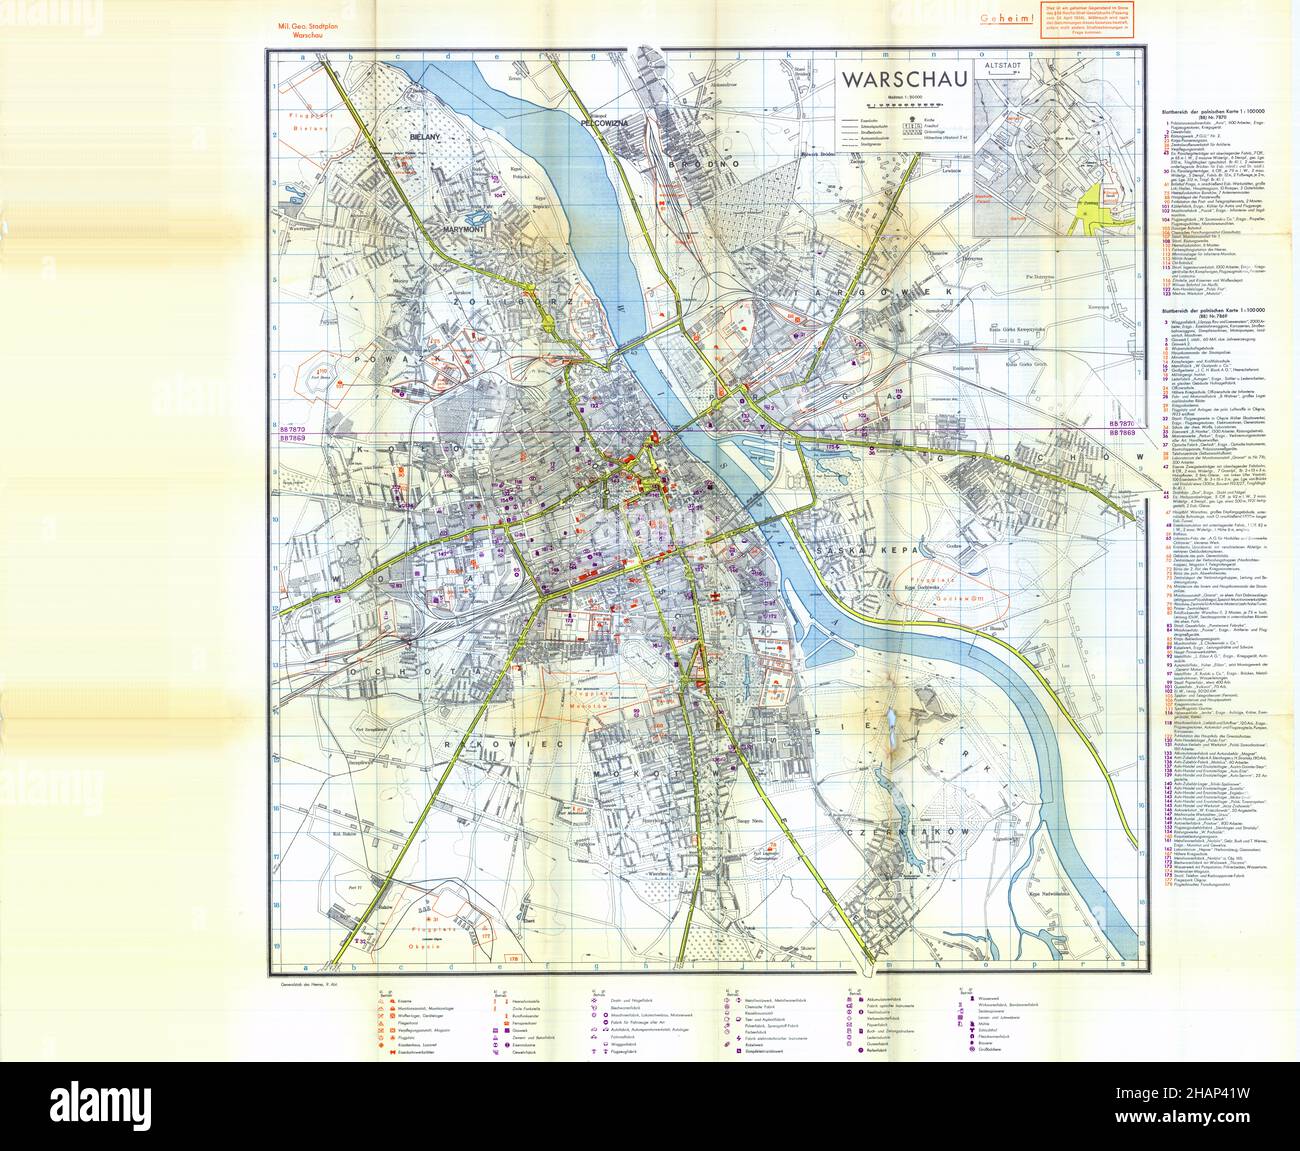 Warsaw Map, Warsaw Plan, Warsaw City Map, Warsaw City Plan, Warsaw Art, Miasto Warszawa, Warschau Karte, Plan Warszawy, Mapa Warszawy, Mapa Polski Stock Photo